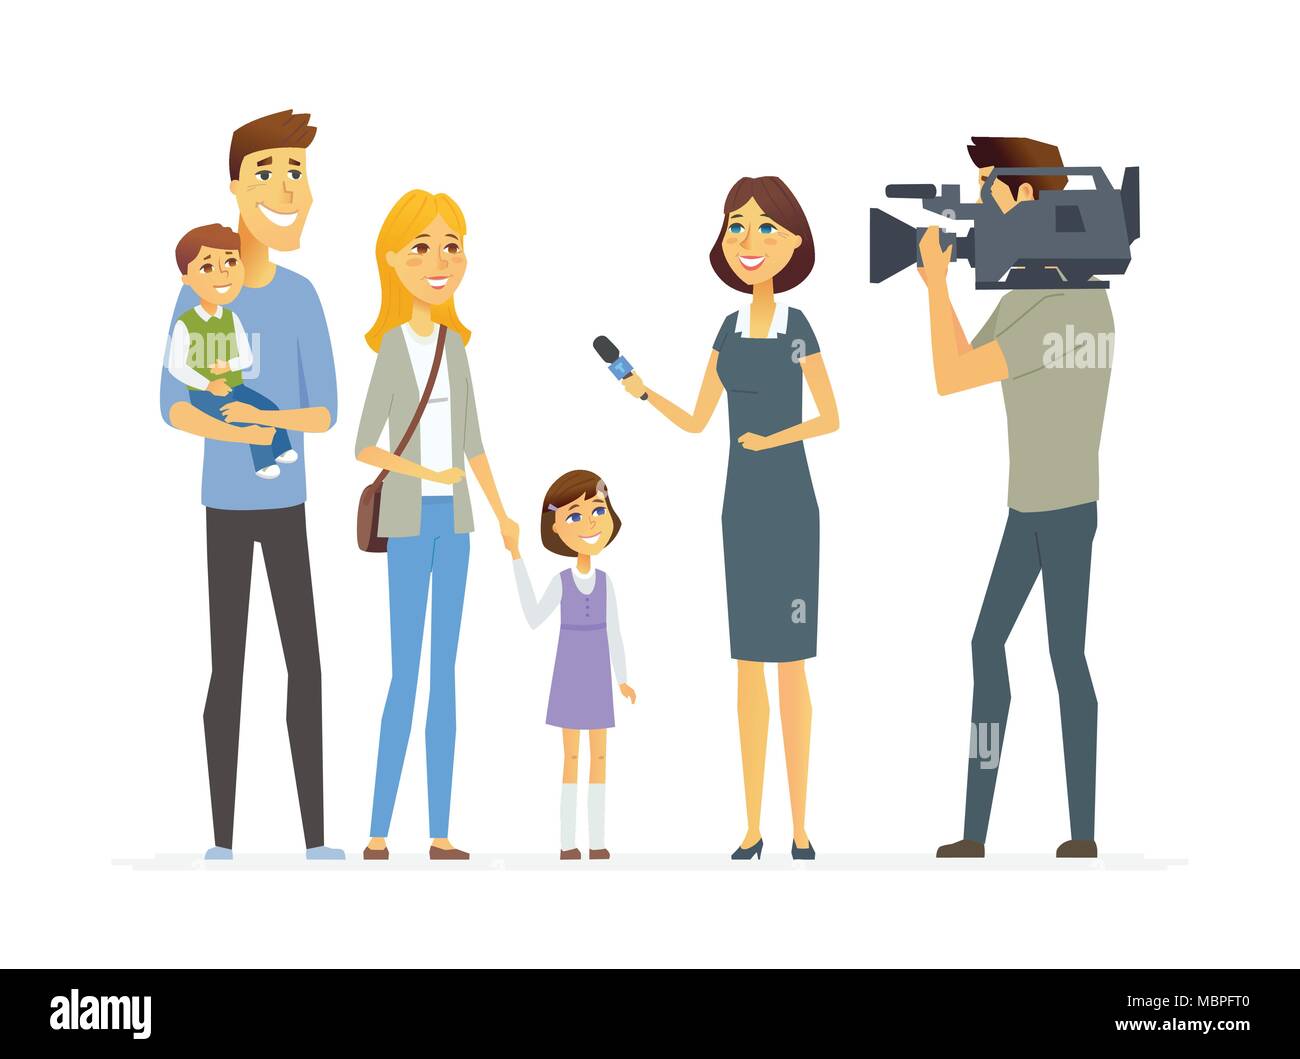 Die TV-Moderatorin interviewte junge Familie - cartoon Menschen Charakter isoliert Abbildung Stock Vektor